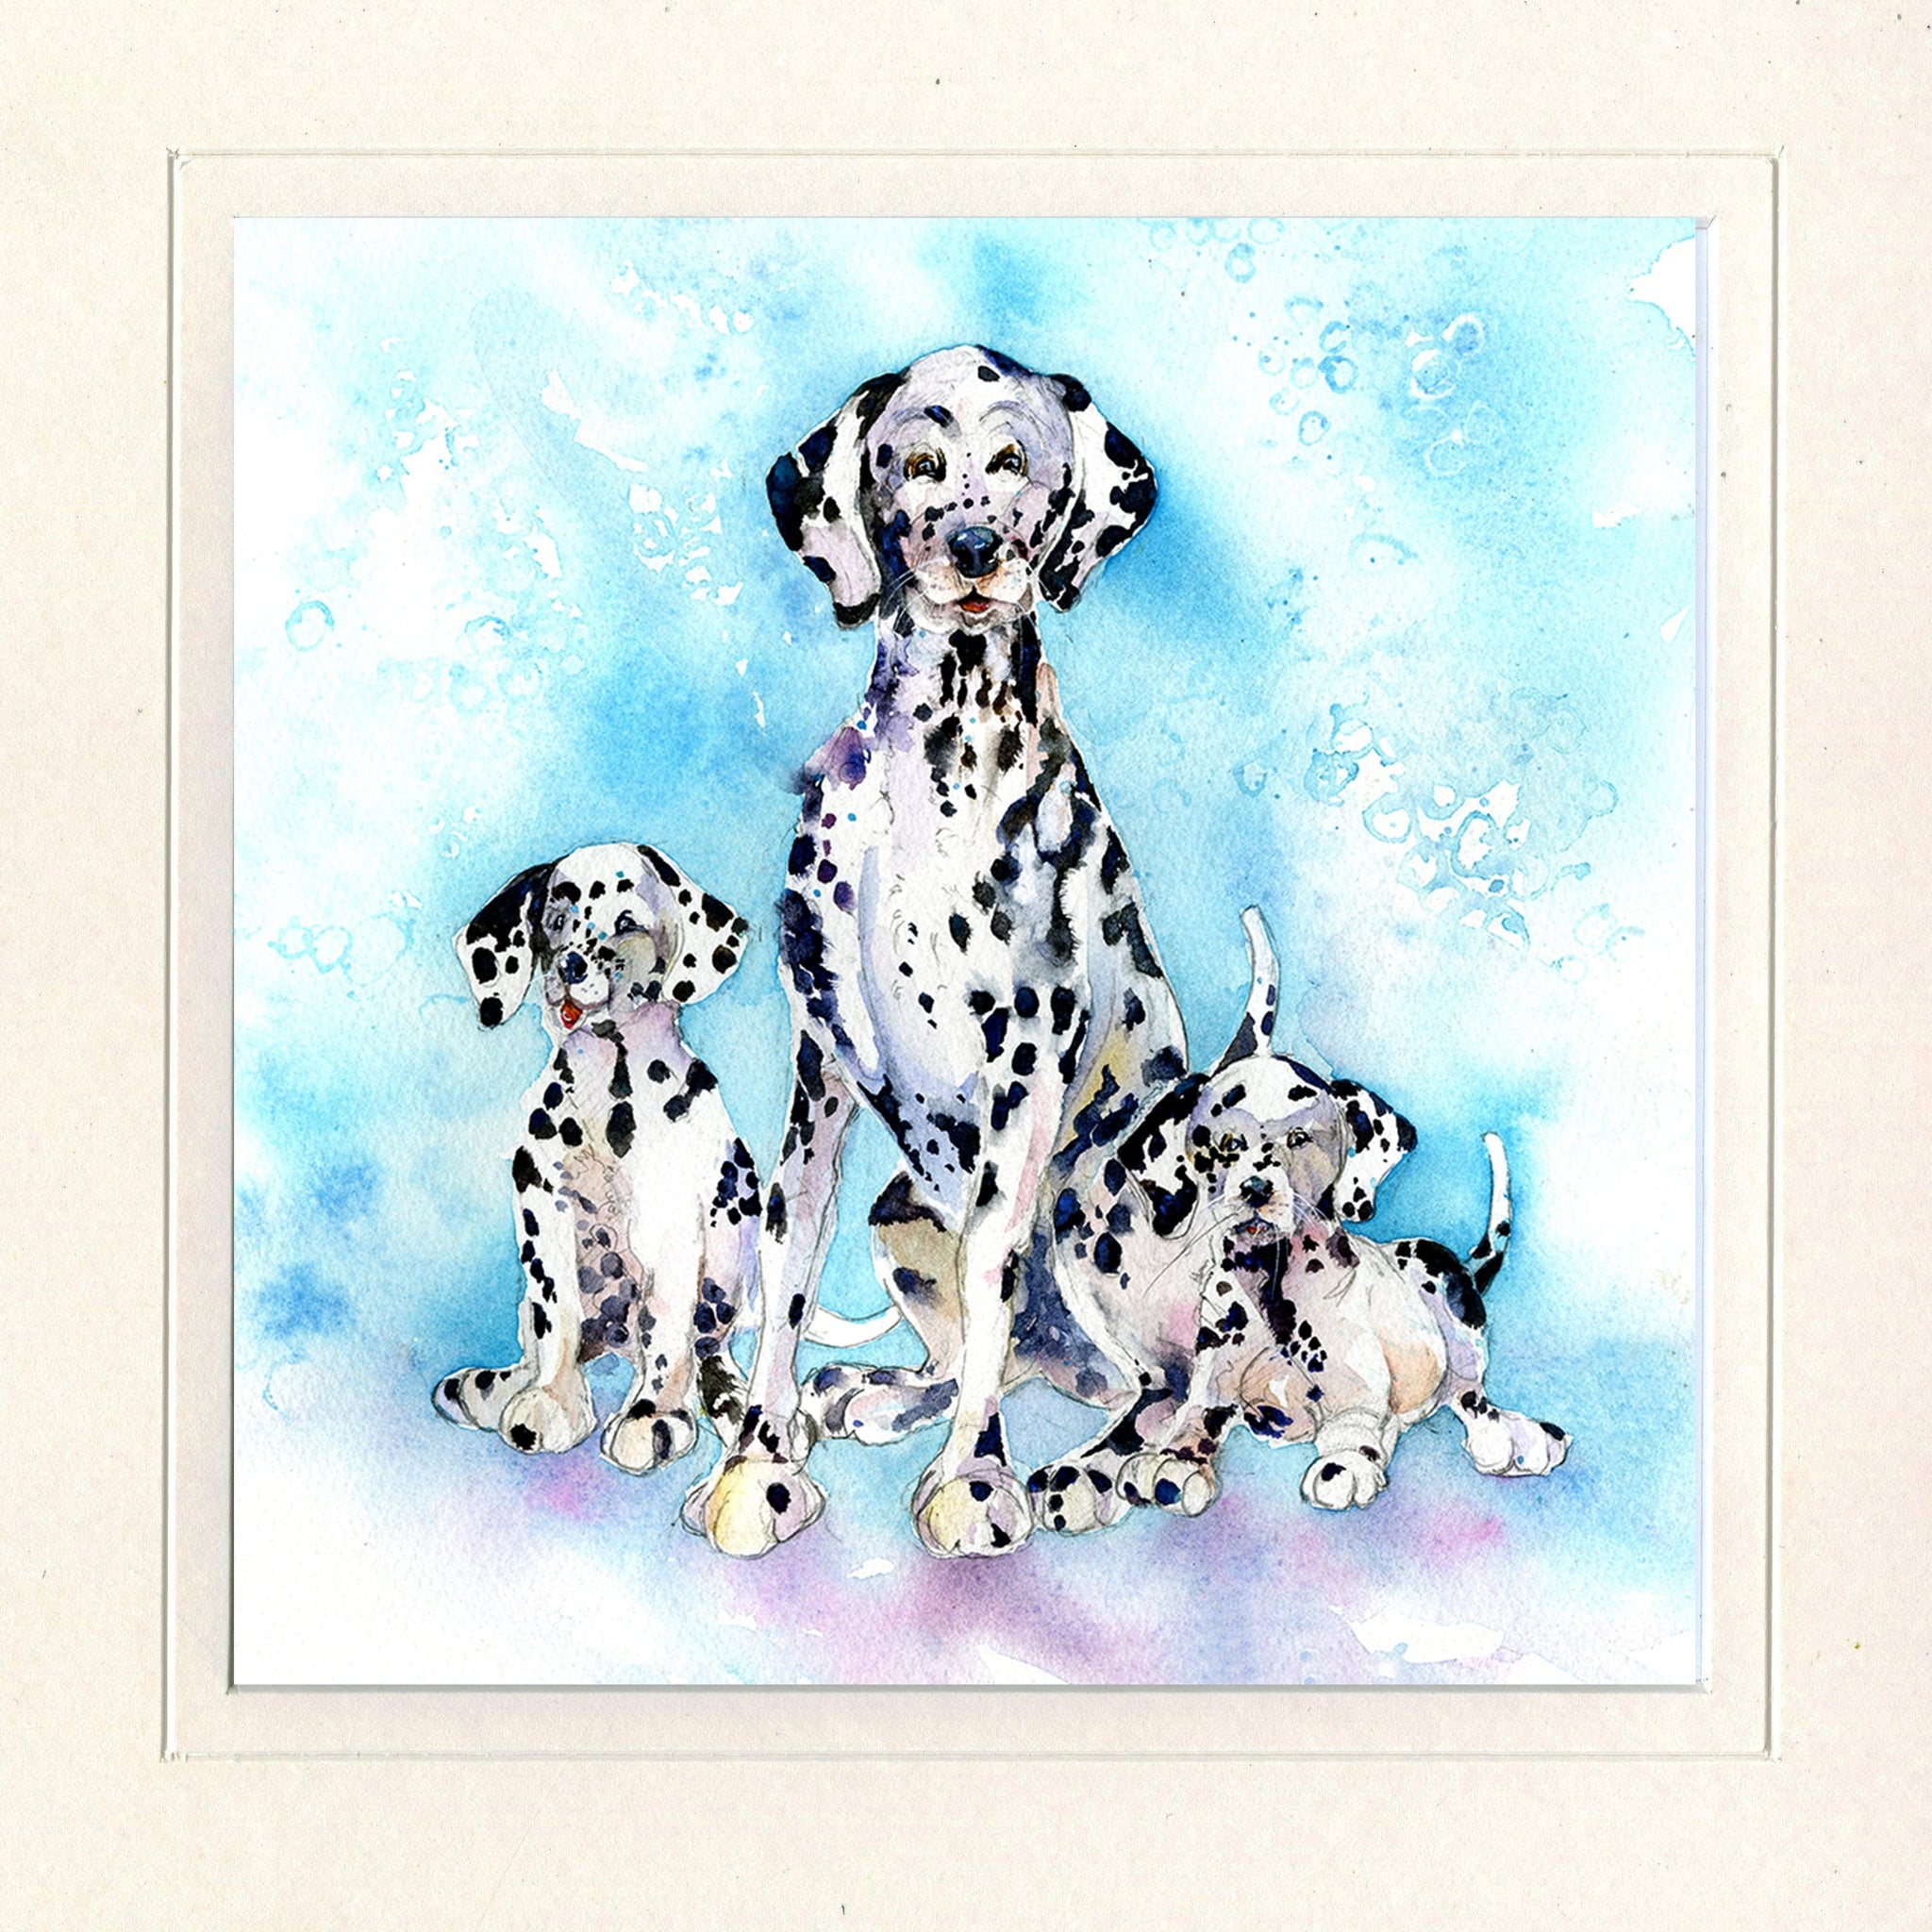 Dalmatians Dog Art Print designed by artist Sheila Gill